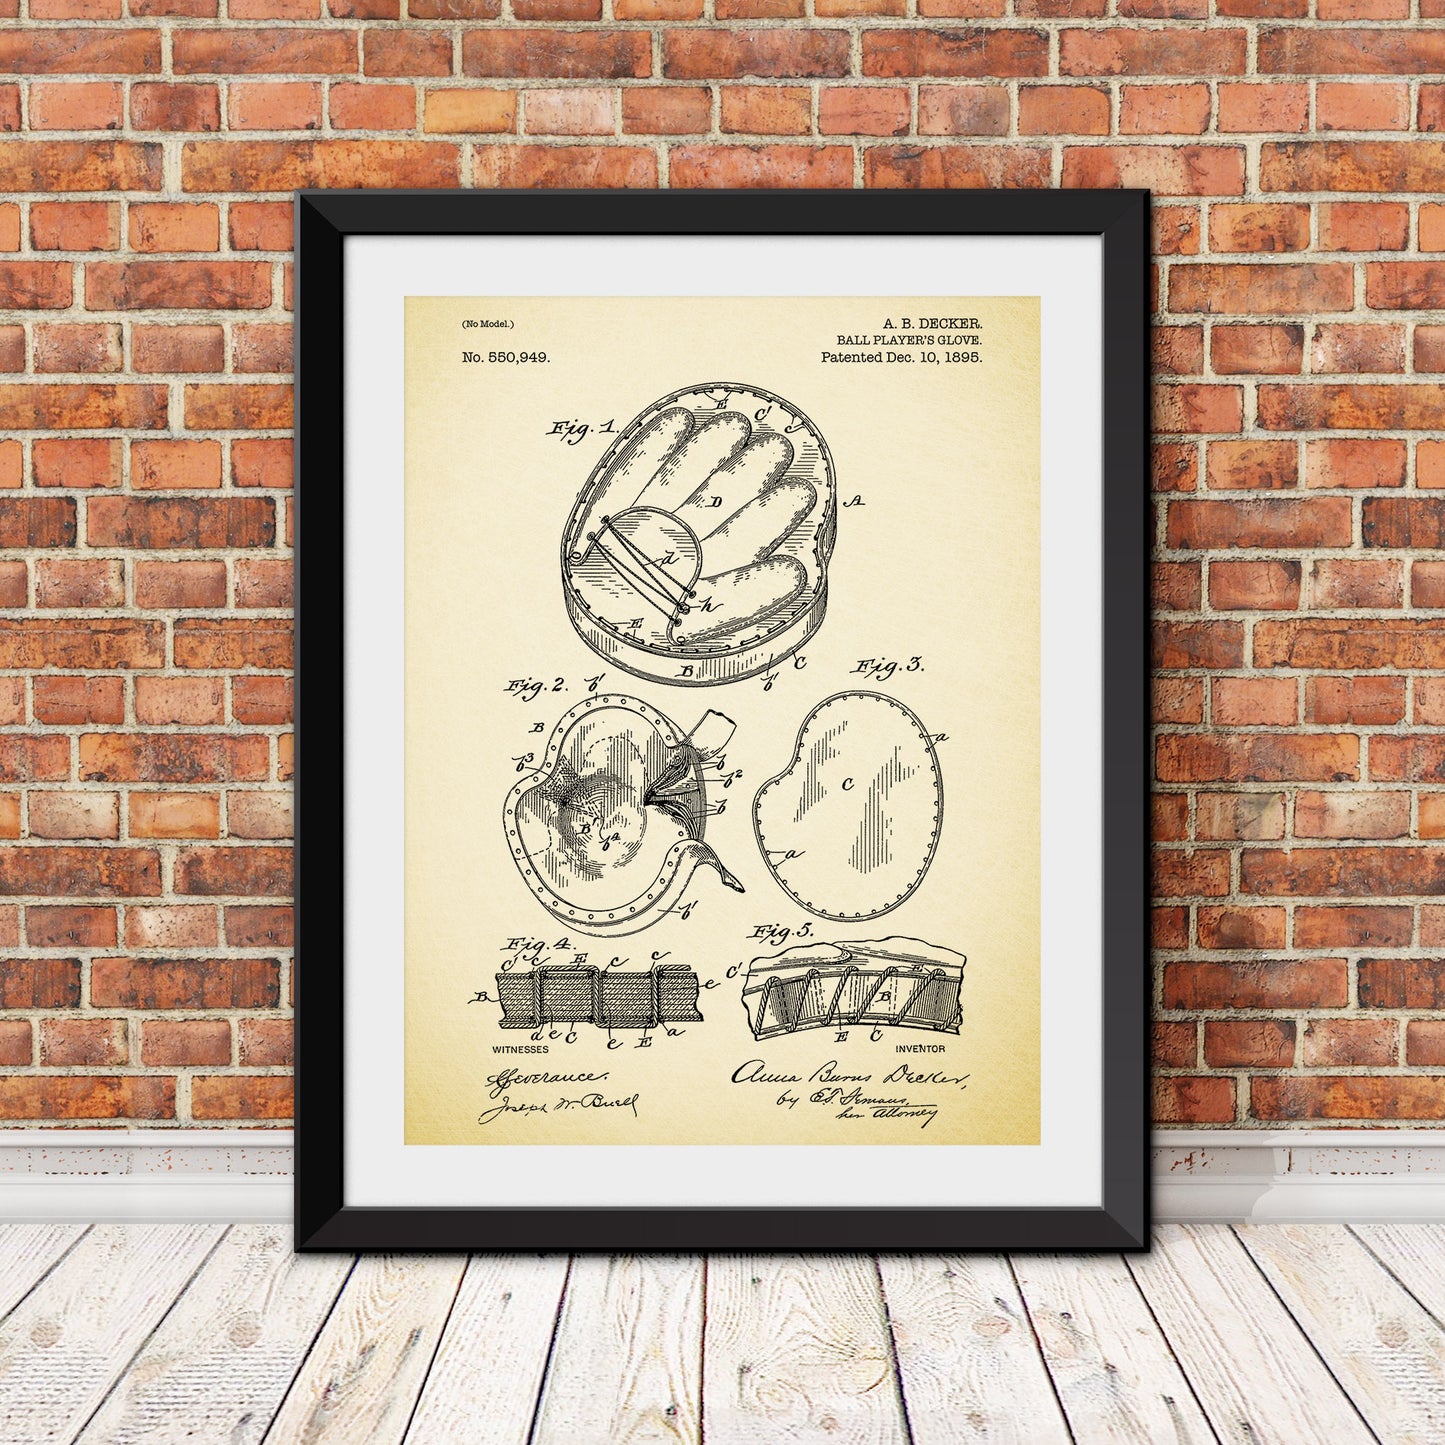 Ball Player Glove Patent Print